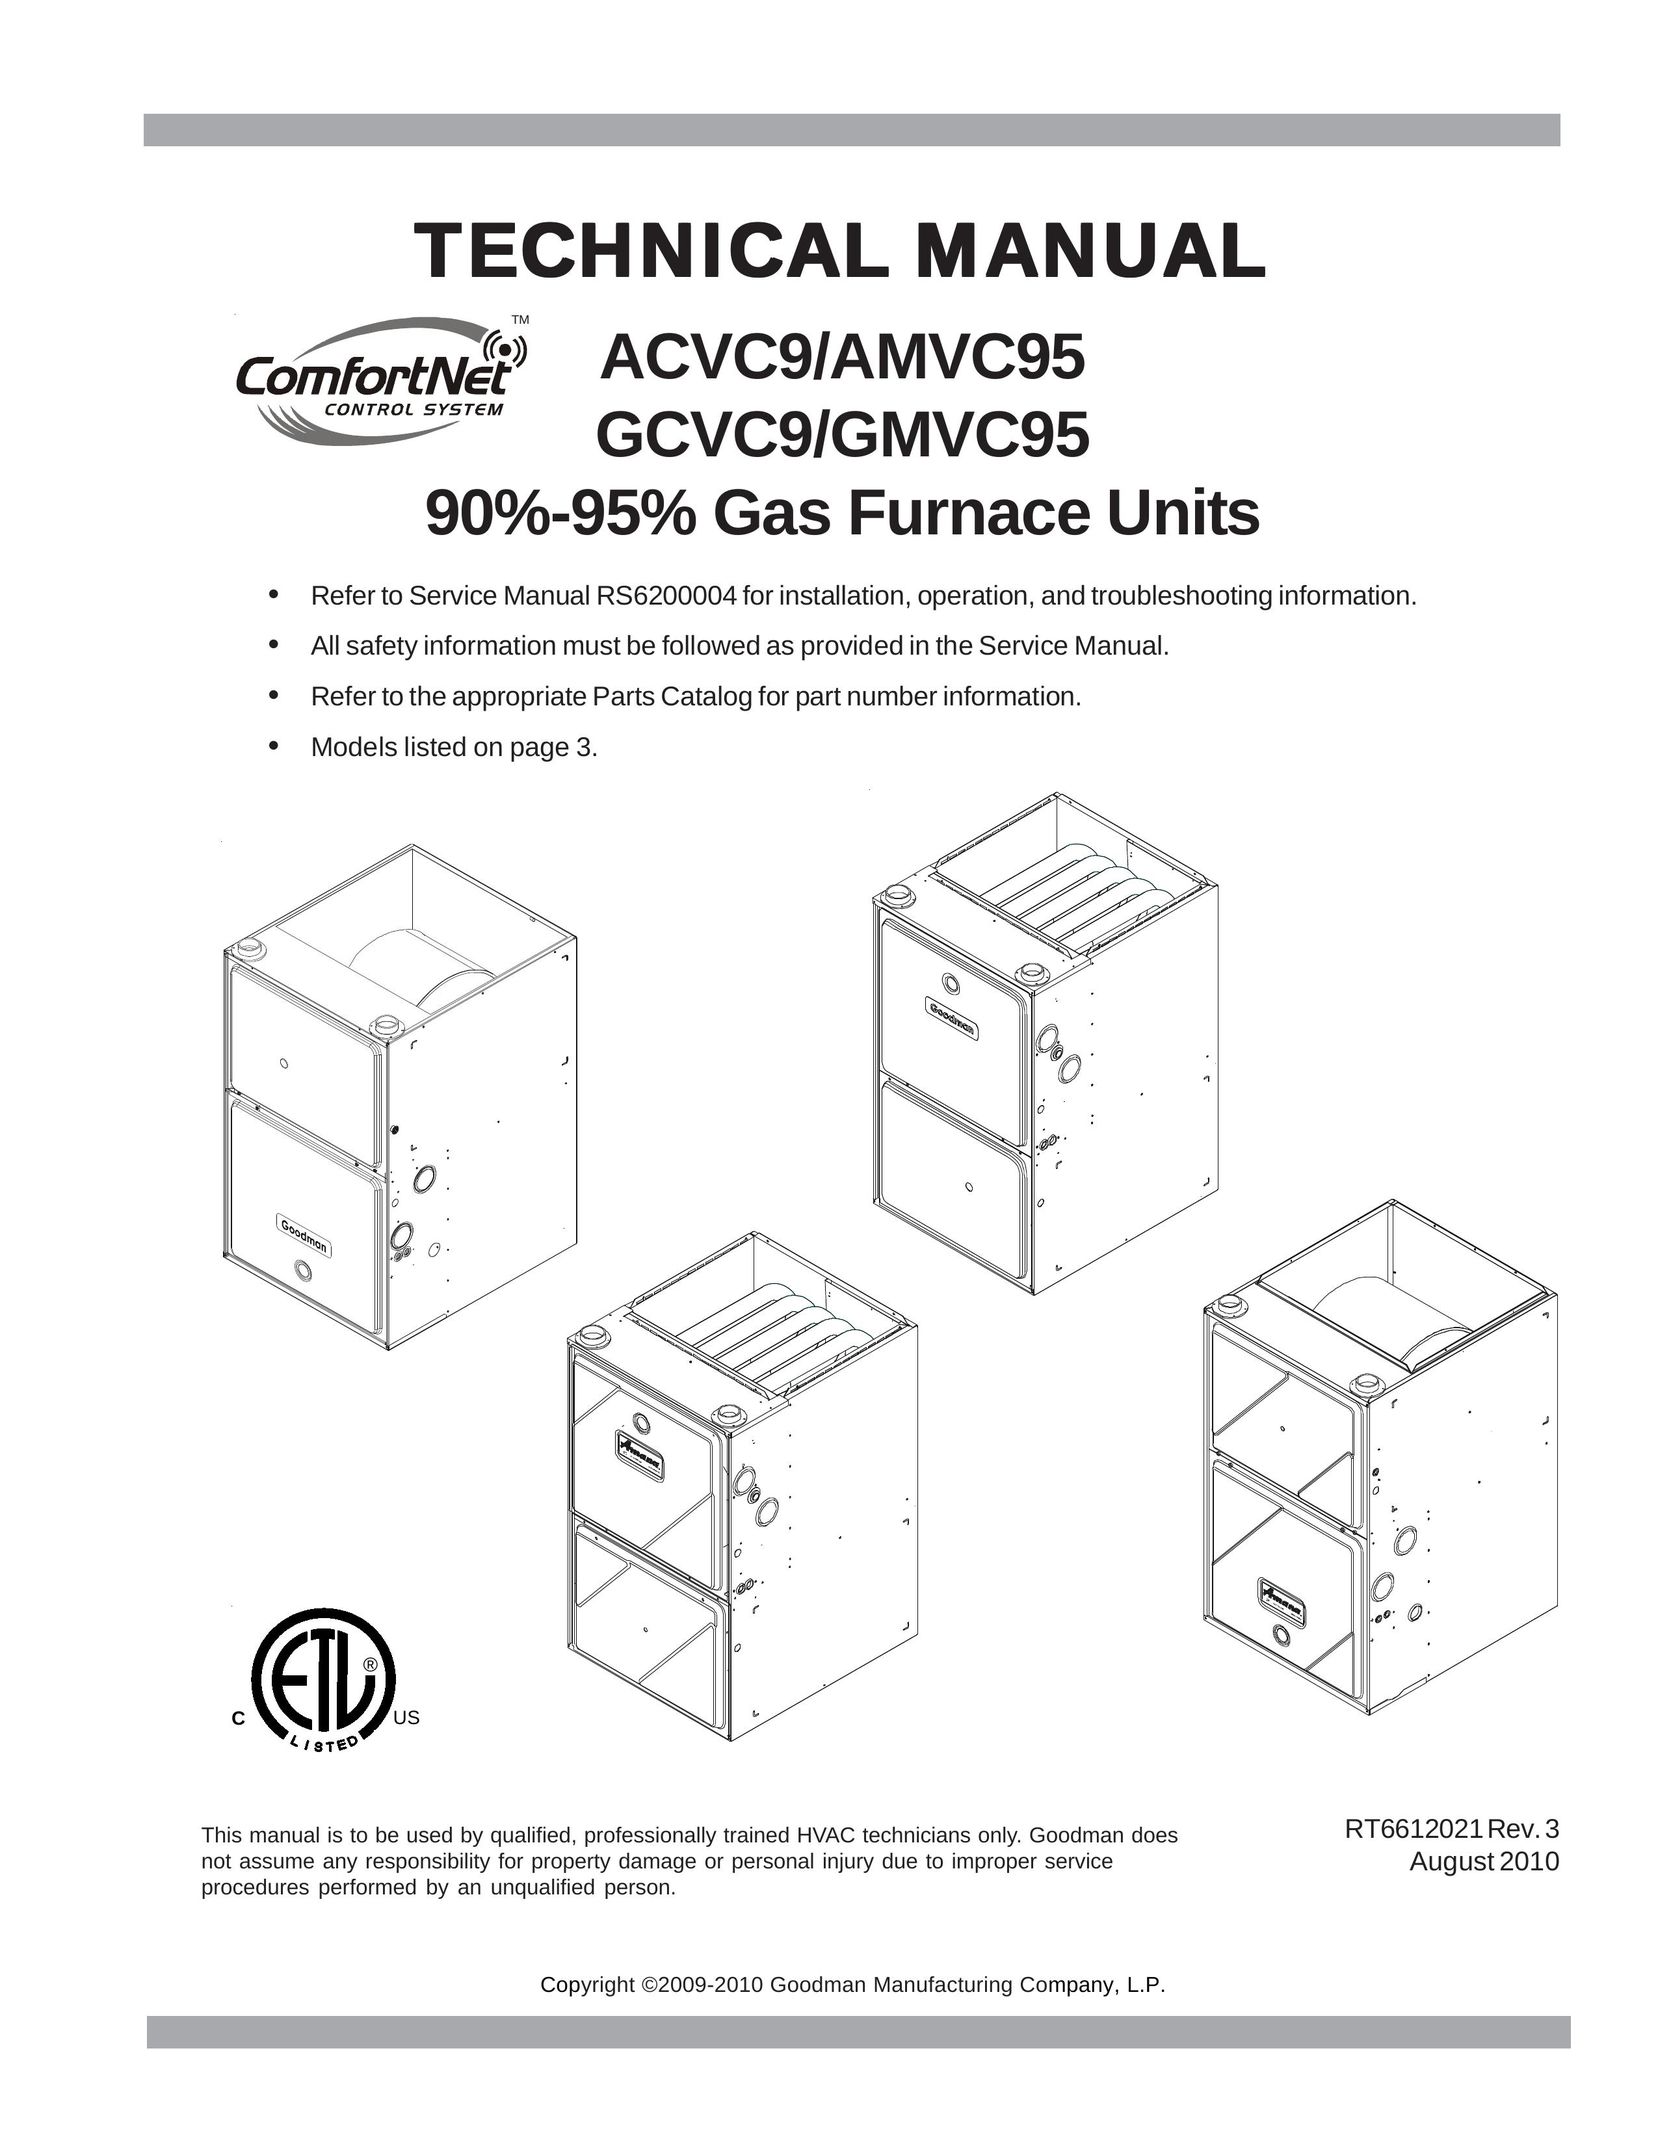 Goodman Mfg GCVC9/GMVC95 Furnace User Manual